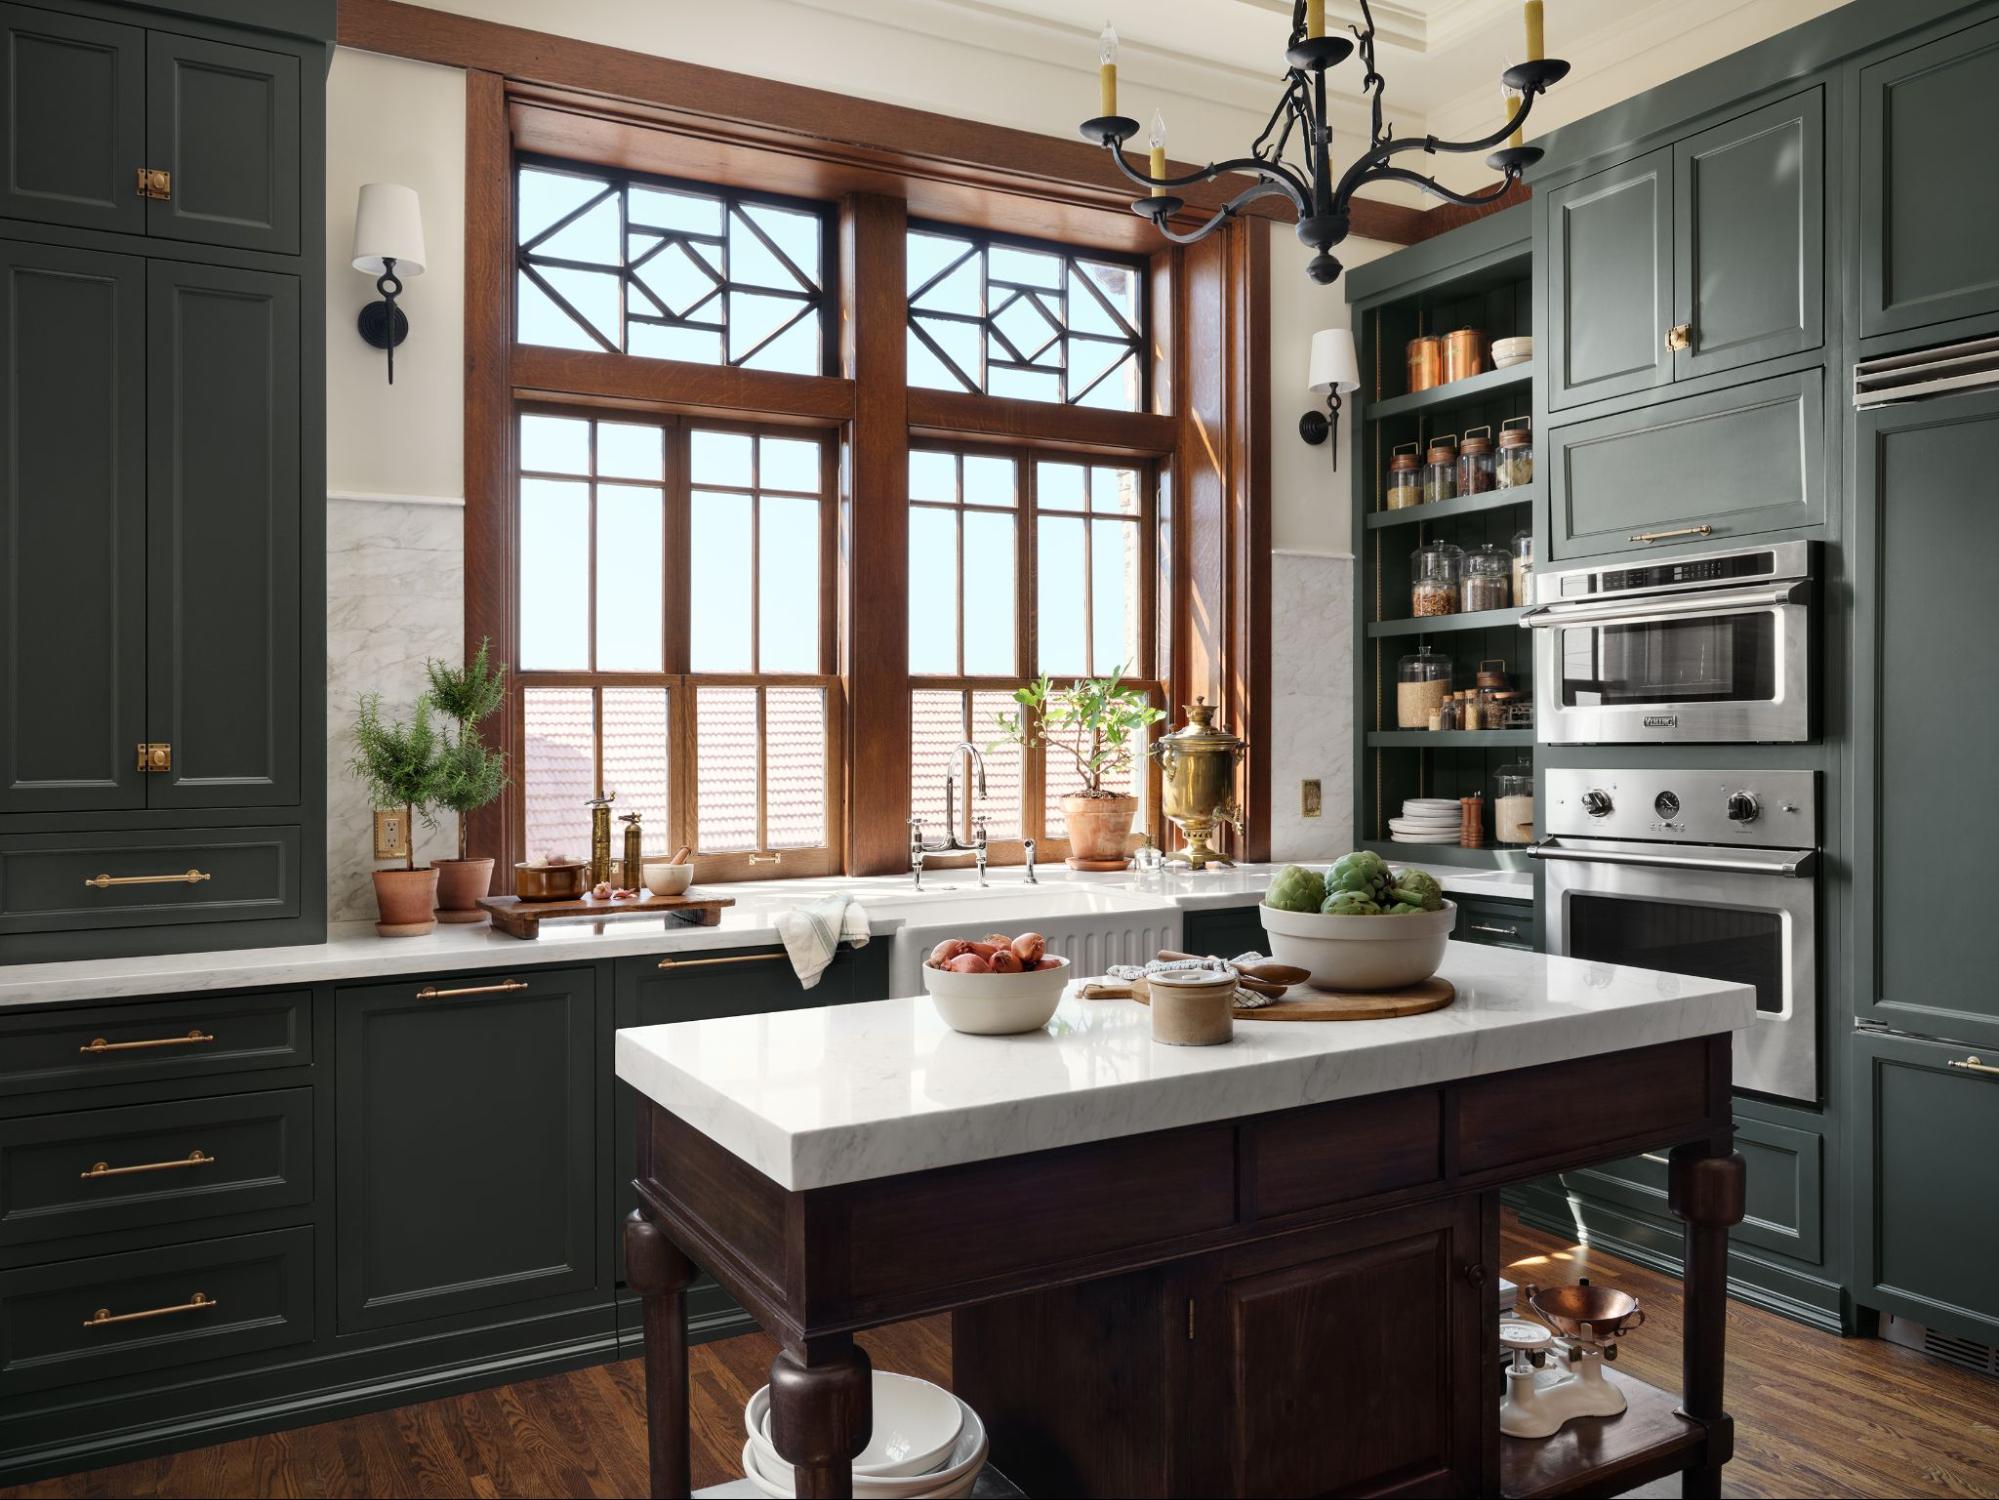 Kitchen Cabinet Paint - Magnolia Home - KILZ Blog